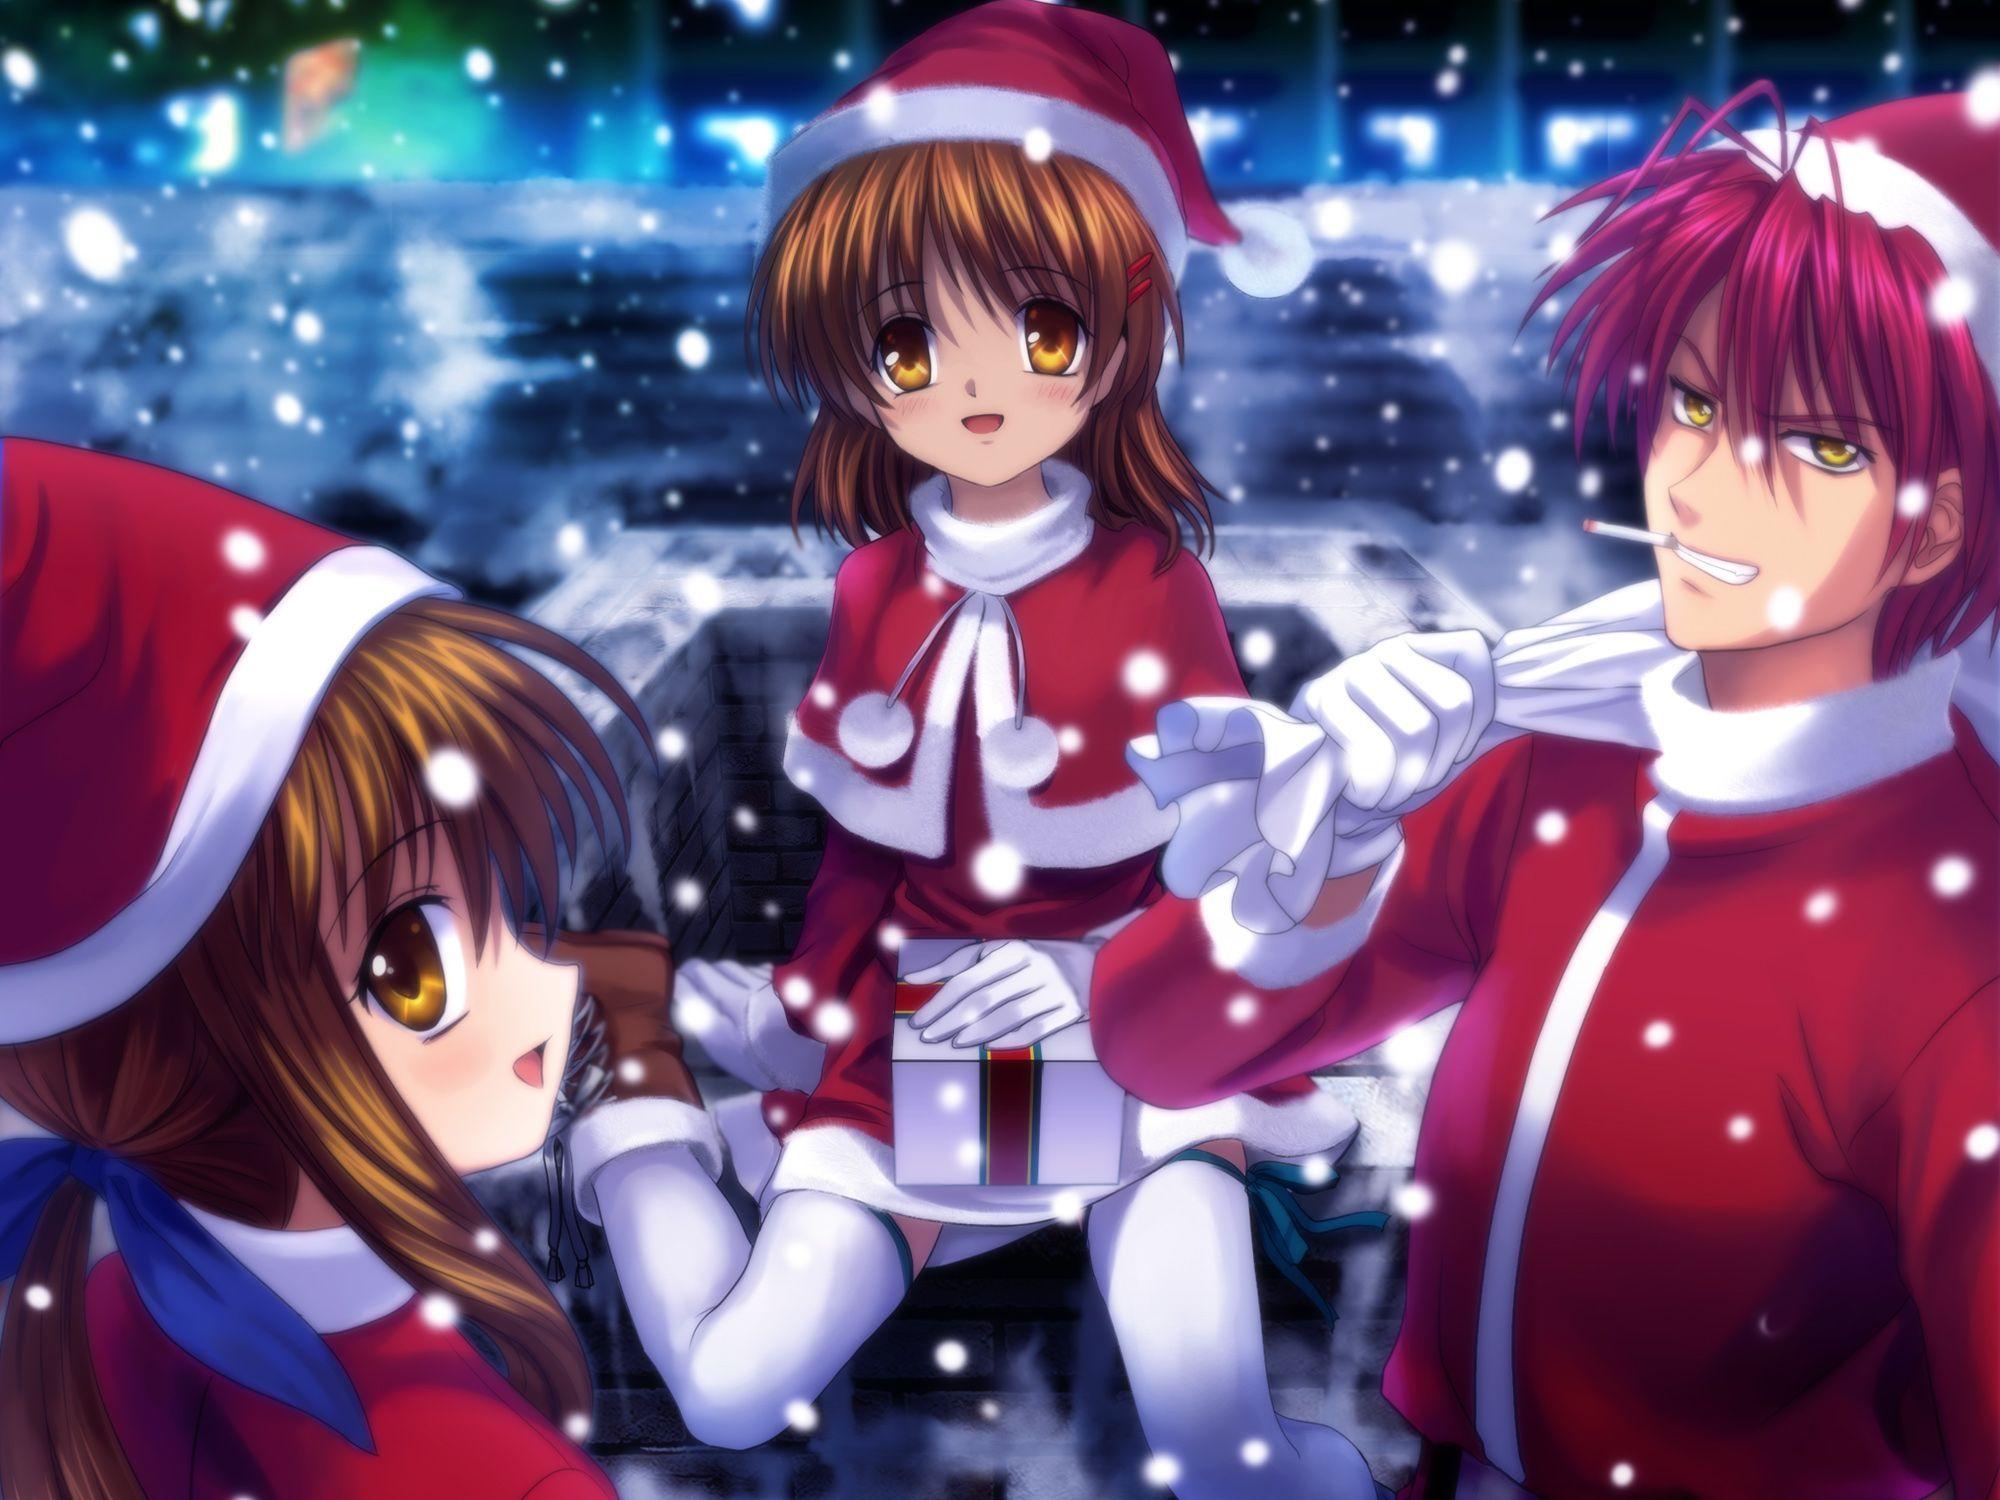 Anime Christmas Wallpaper Desktop. Anime christmas, Anime, Anime wallpaper